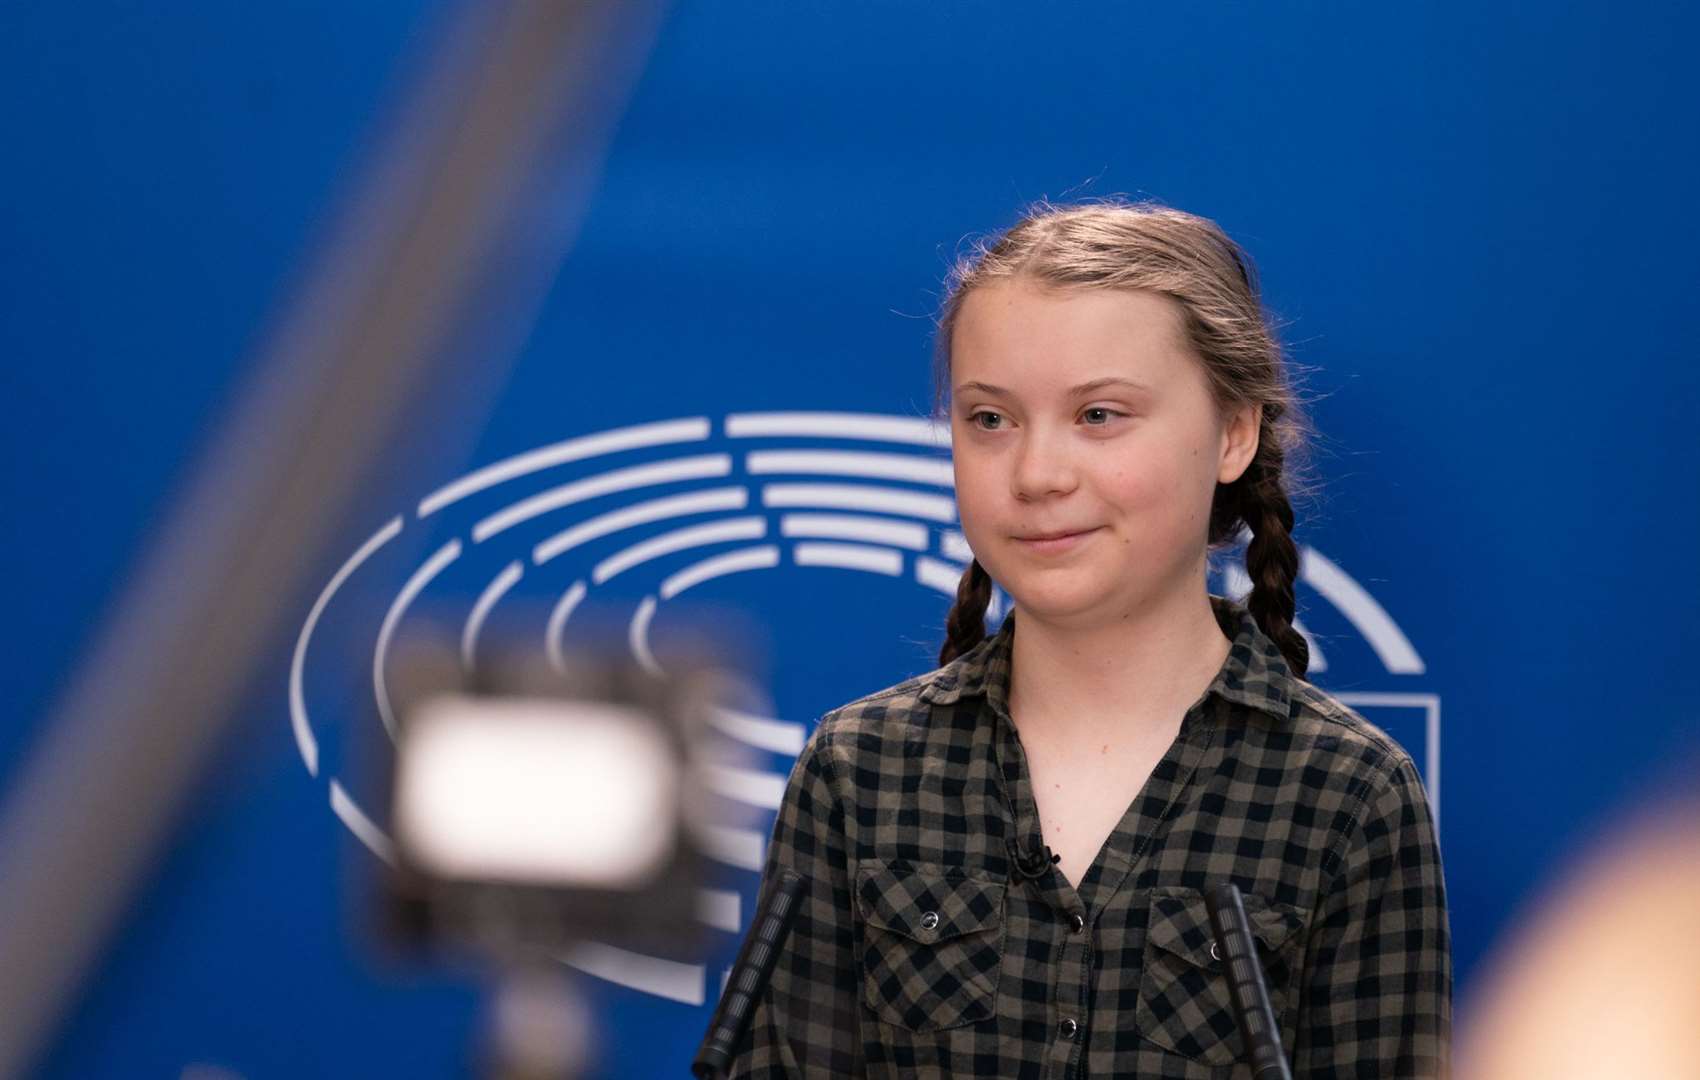 Climate change activist Greta Thunberg